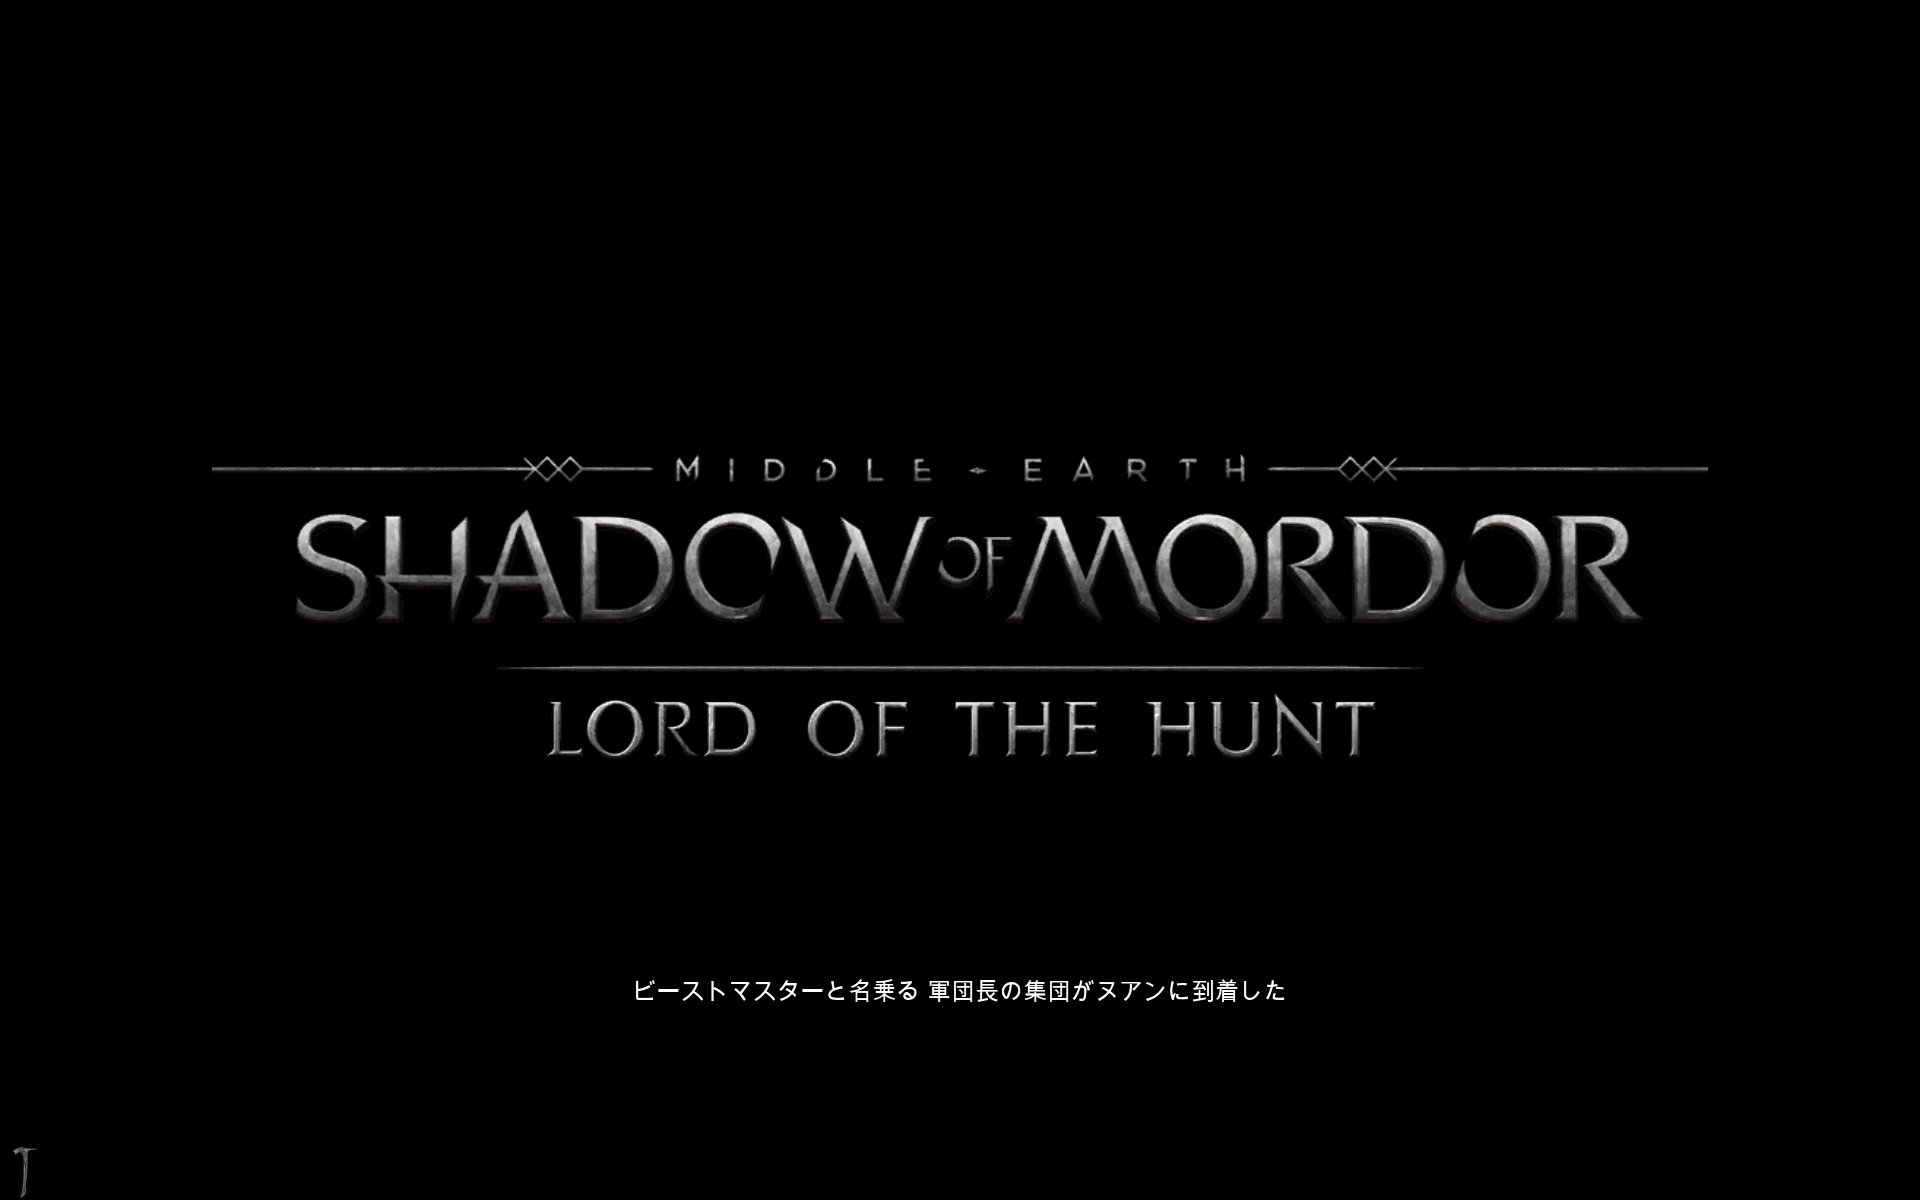 PC ゲーム Middle-earth: Shadow of Mordor GOTY 日本語化とフォント変更方法と DLC The Bright Lord（明王）で日本語を表示する方法、PC ゲーム Middle-earth: Shadow of Mordor GOTY - DLC Lord of the Hunt（狩りの王）オープニングタイトルロゴ表示修正方法、日本語翻訳ファイル globalresources_en.embb 修正後、日本語環境で DLC Lord of the Hunt（狩りの王）ゲーム開始時のオープニングタイトルロゴが正常に表示したスクリーンショット